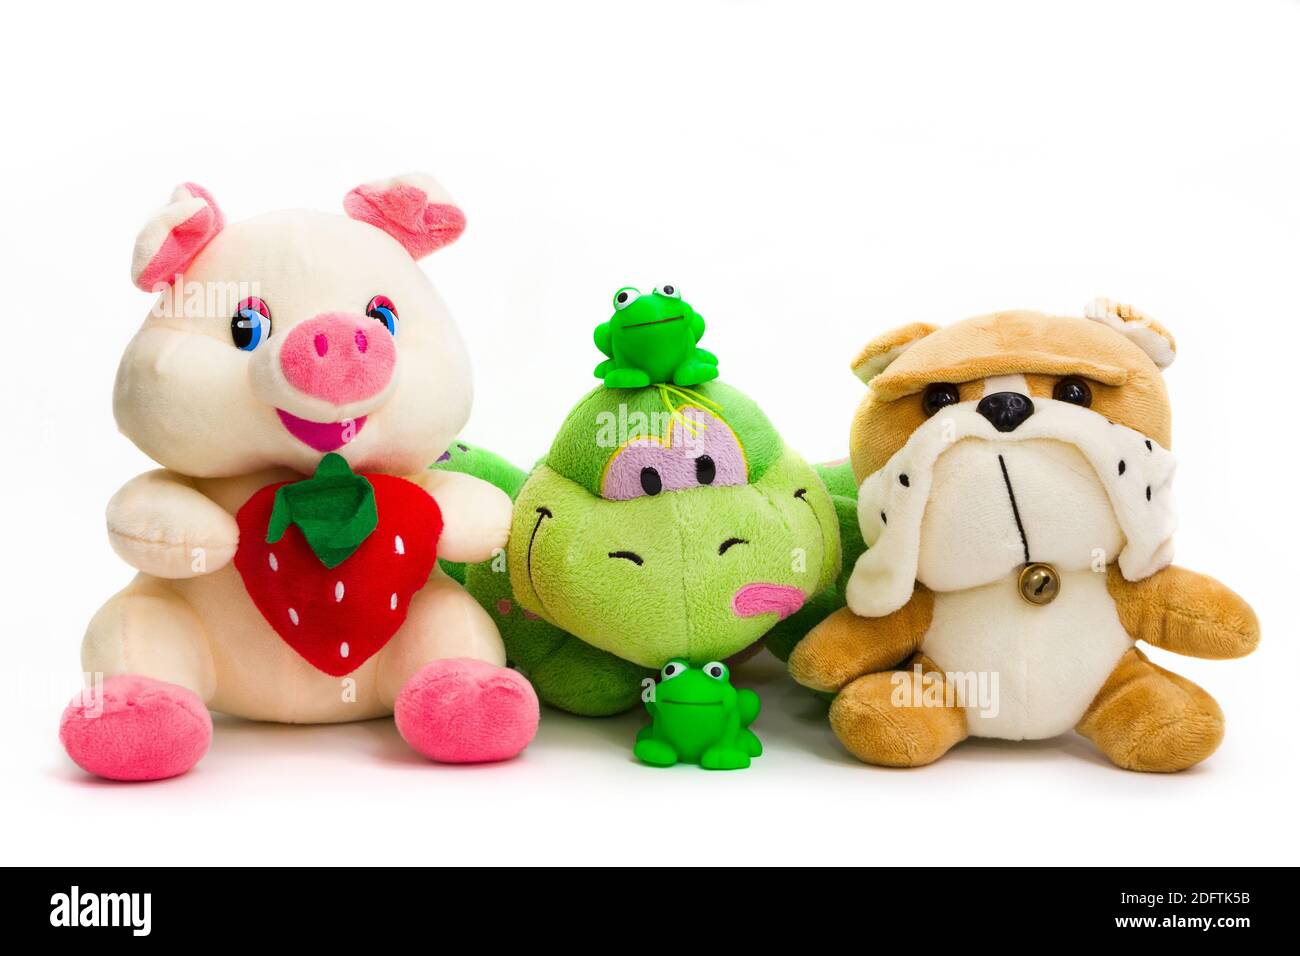 Children's soft toys on a white background. Stock Photo